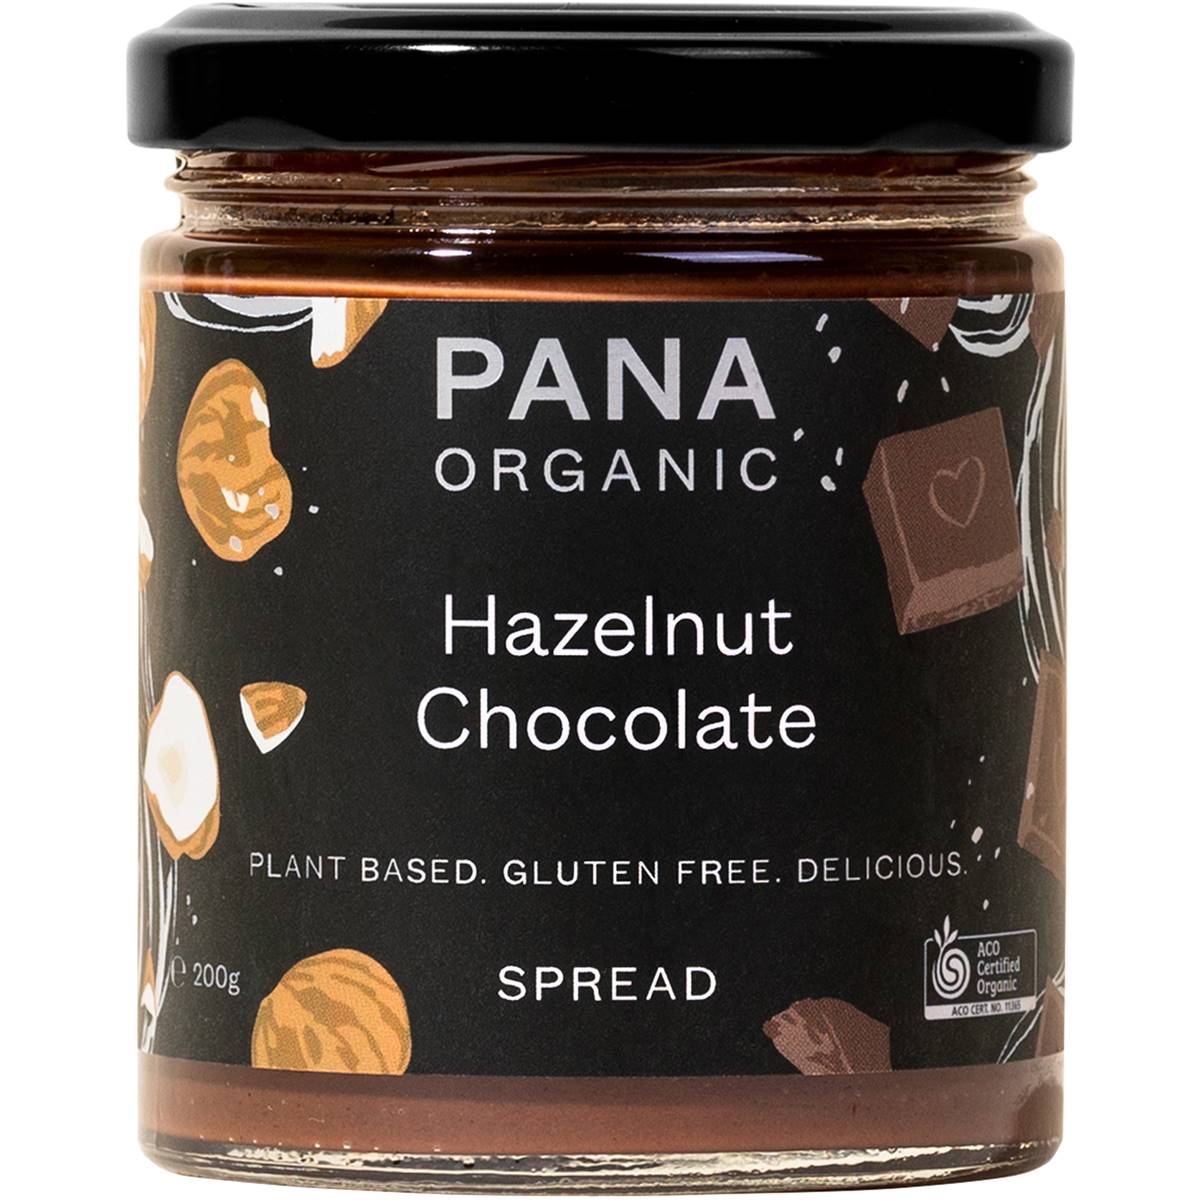 Pana - Organic Hazelnut Chocolate Spread - [200g]